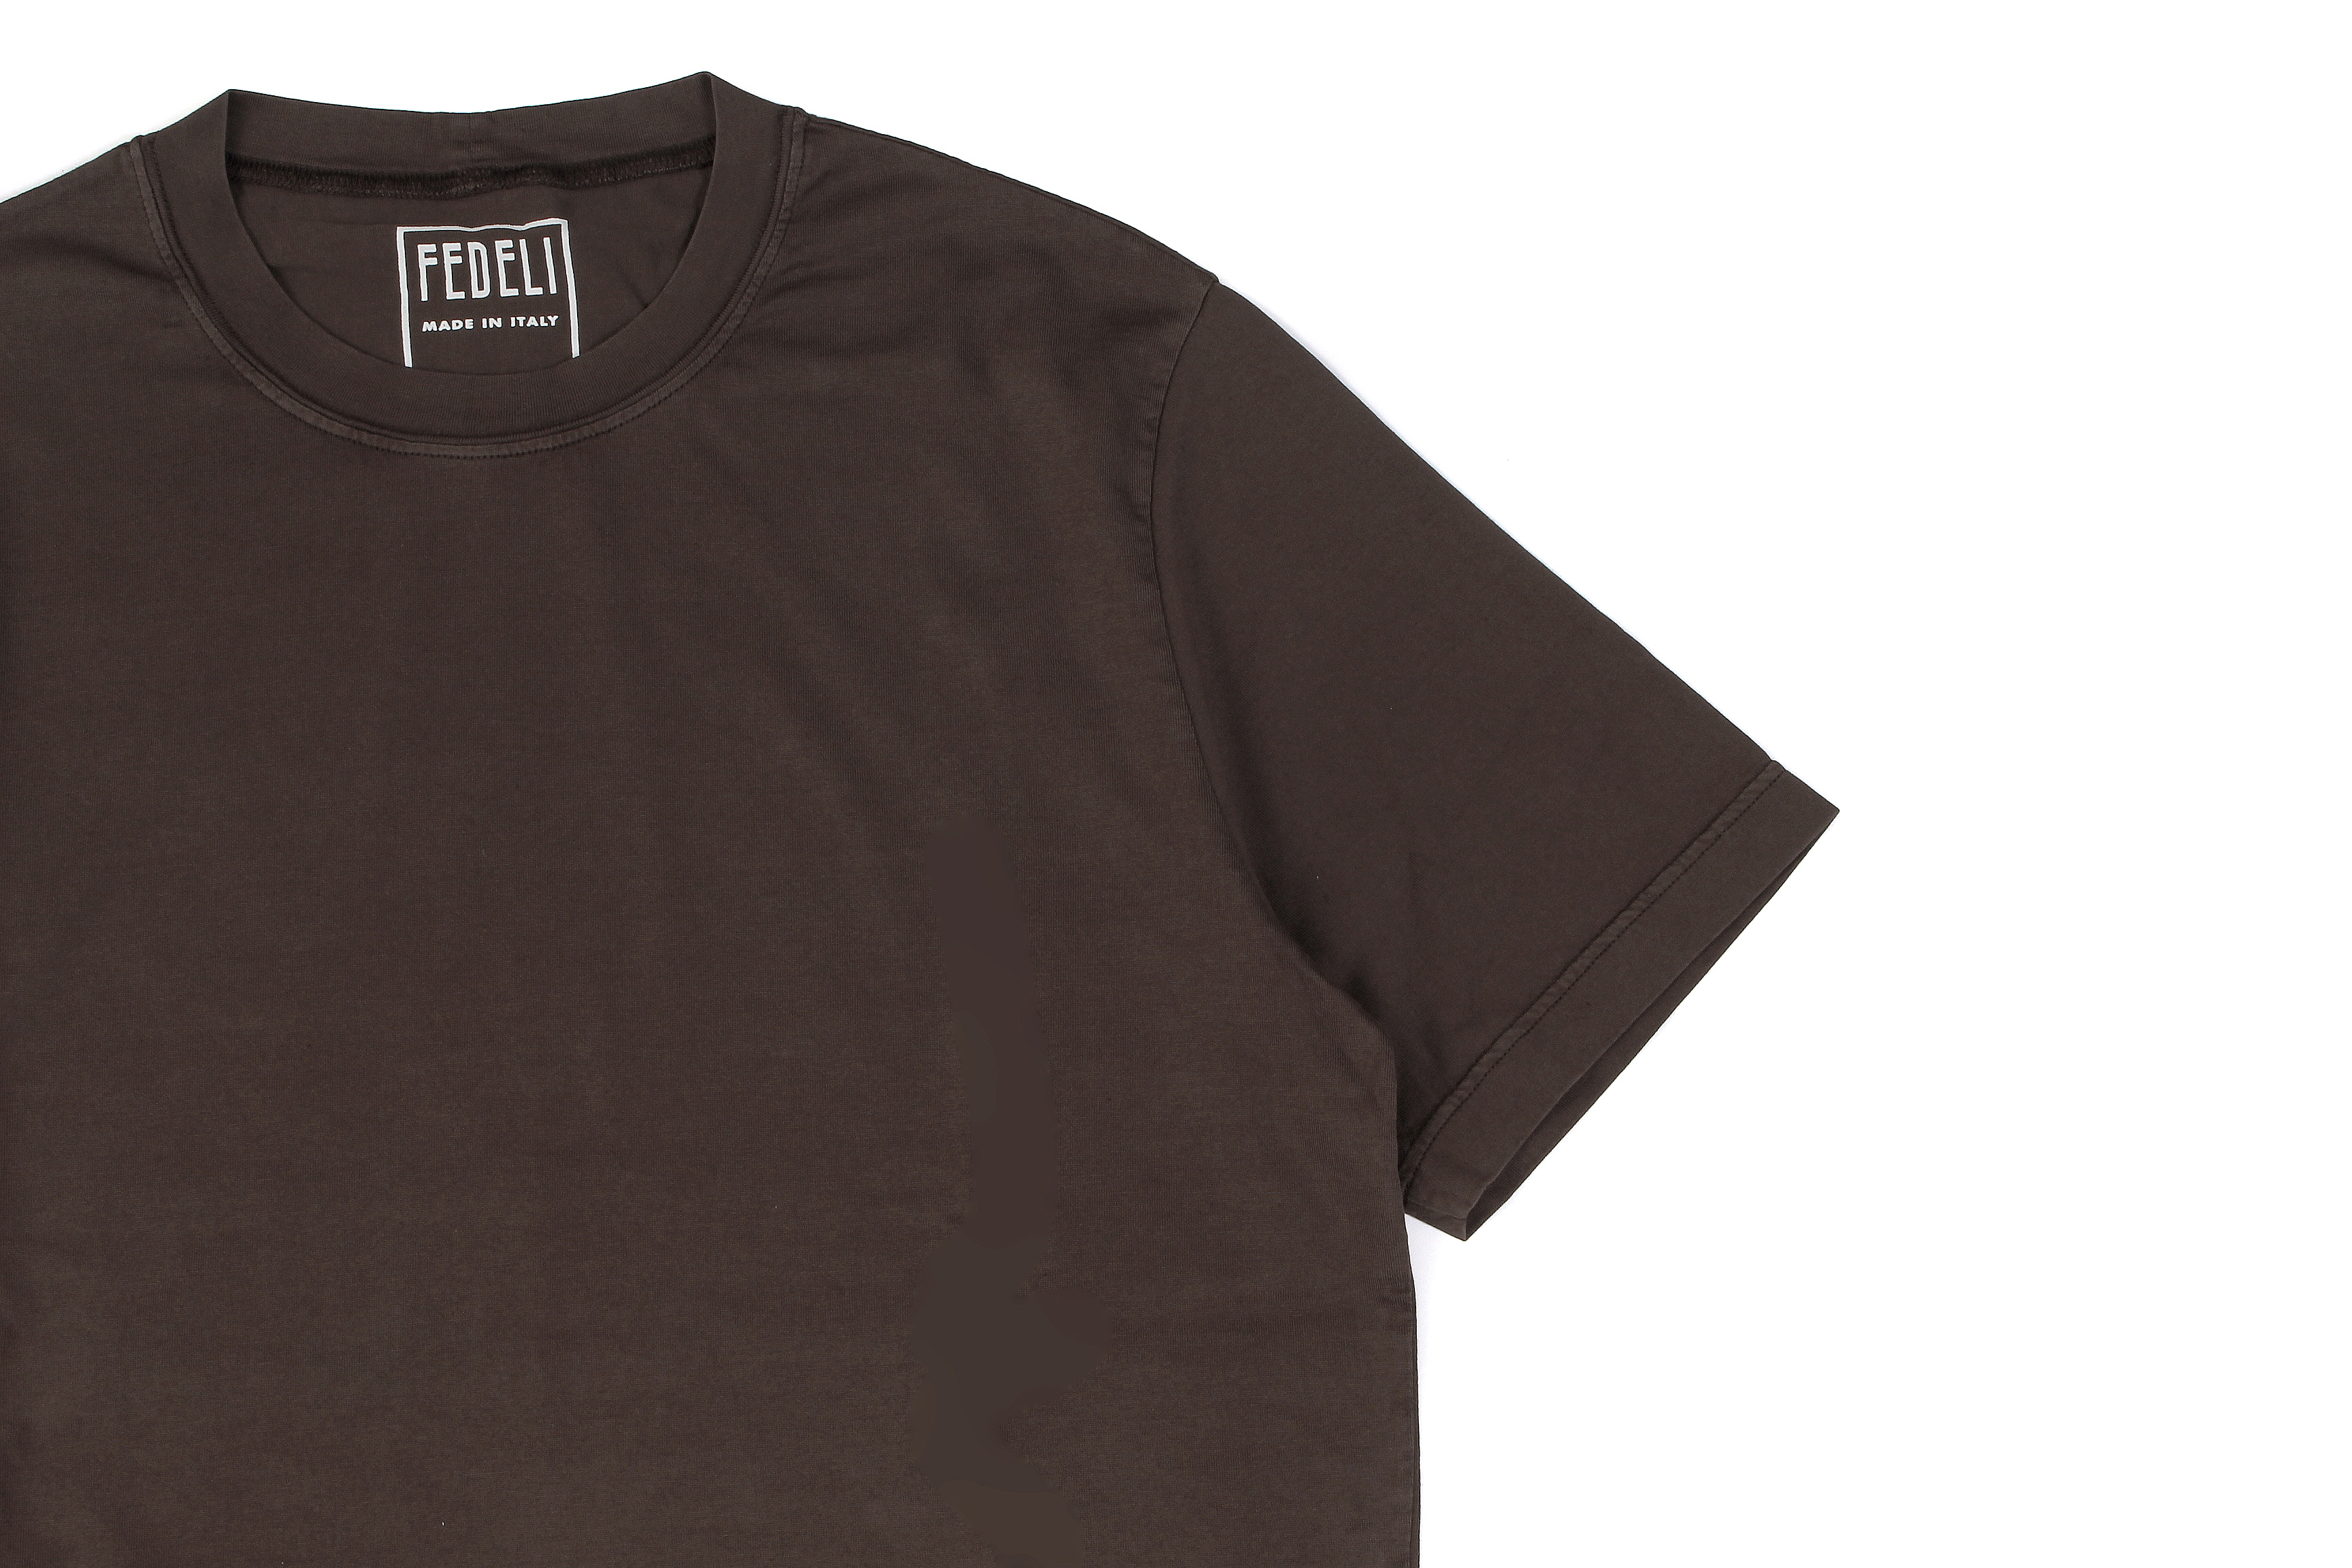 FEDELI(フェデーリ) Crew Neck T-shirt (クルーネック Tシャツ) ギザコットン Tシャツ BROWN (ブラウン・811) made in italy (イタリア製) 2020 春夏 【ご予約開始】愛知 名古屋 altoediritto アルトエデリット TEE